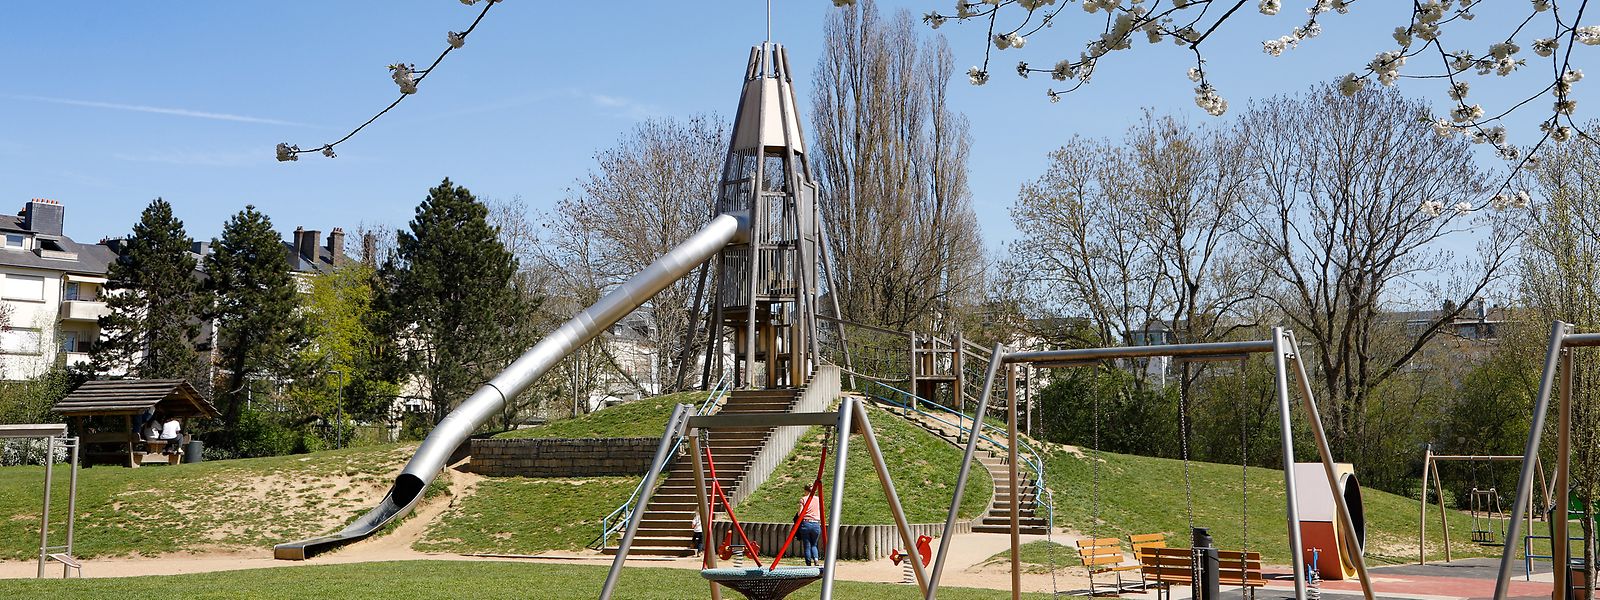 O parque infantil de Merl tem quase 8.000 m2